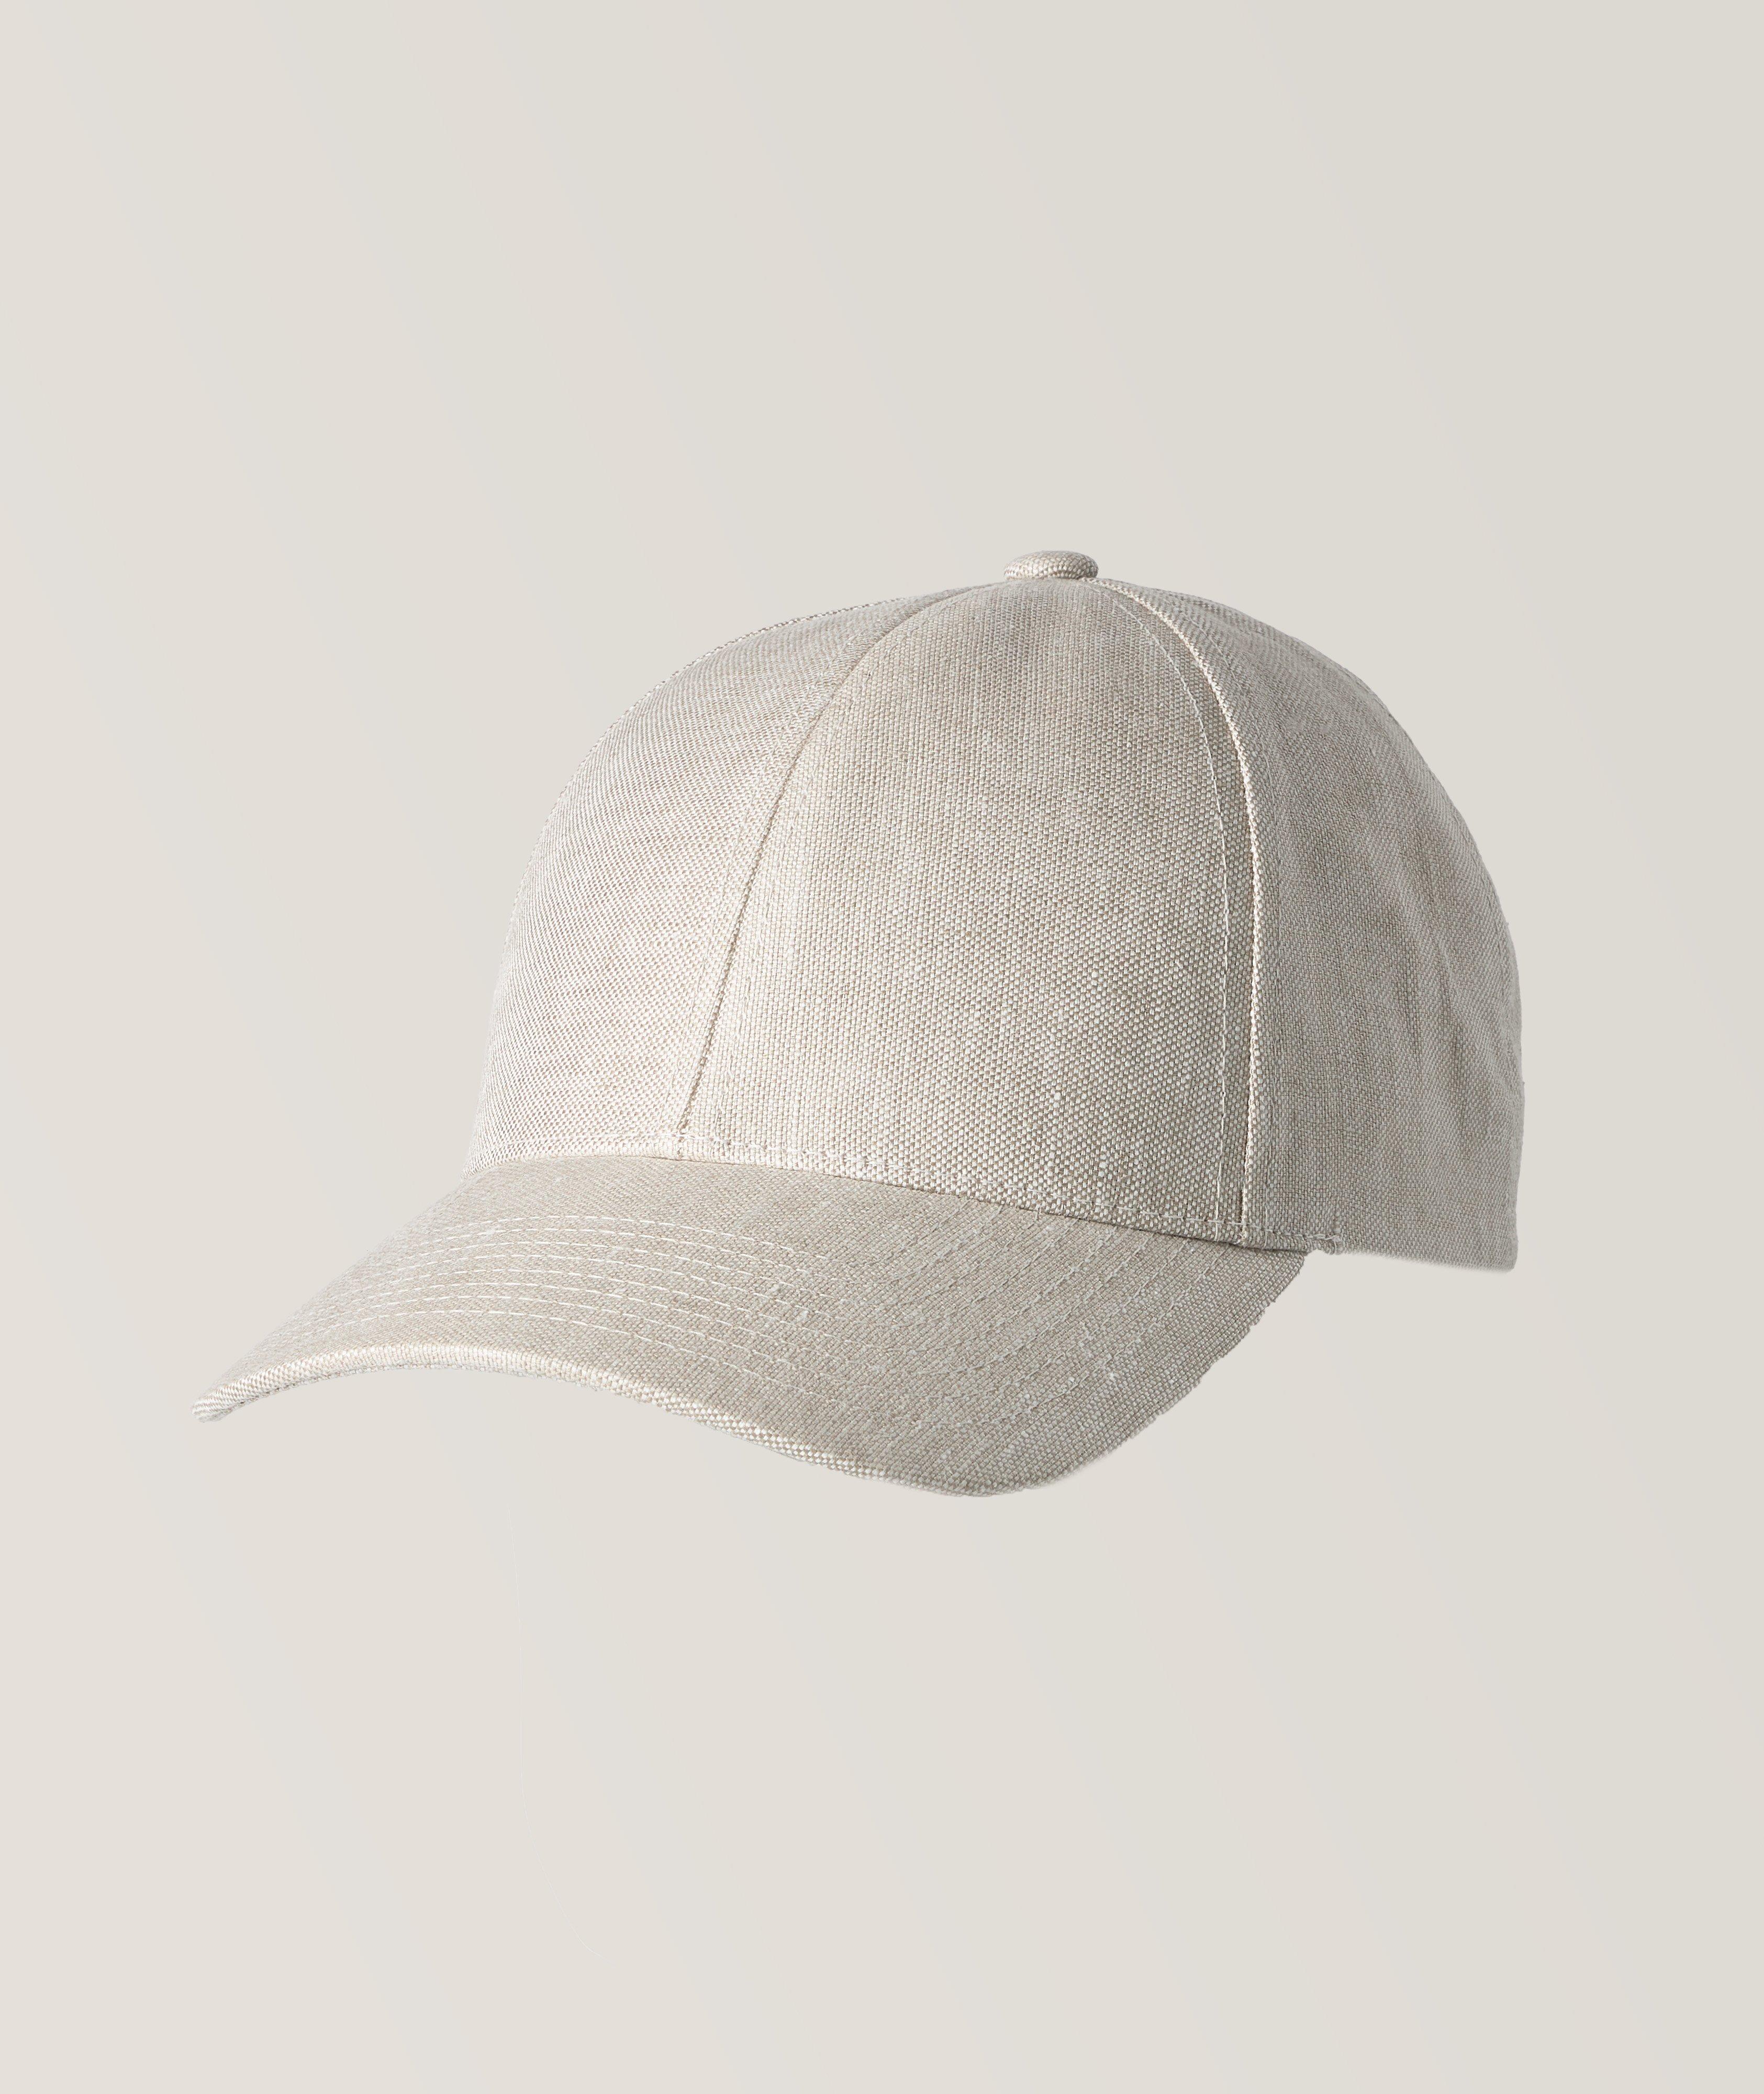 Linen Baseball Cap image 0